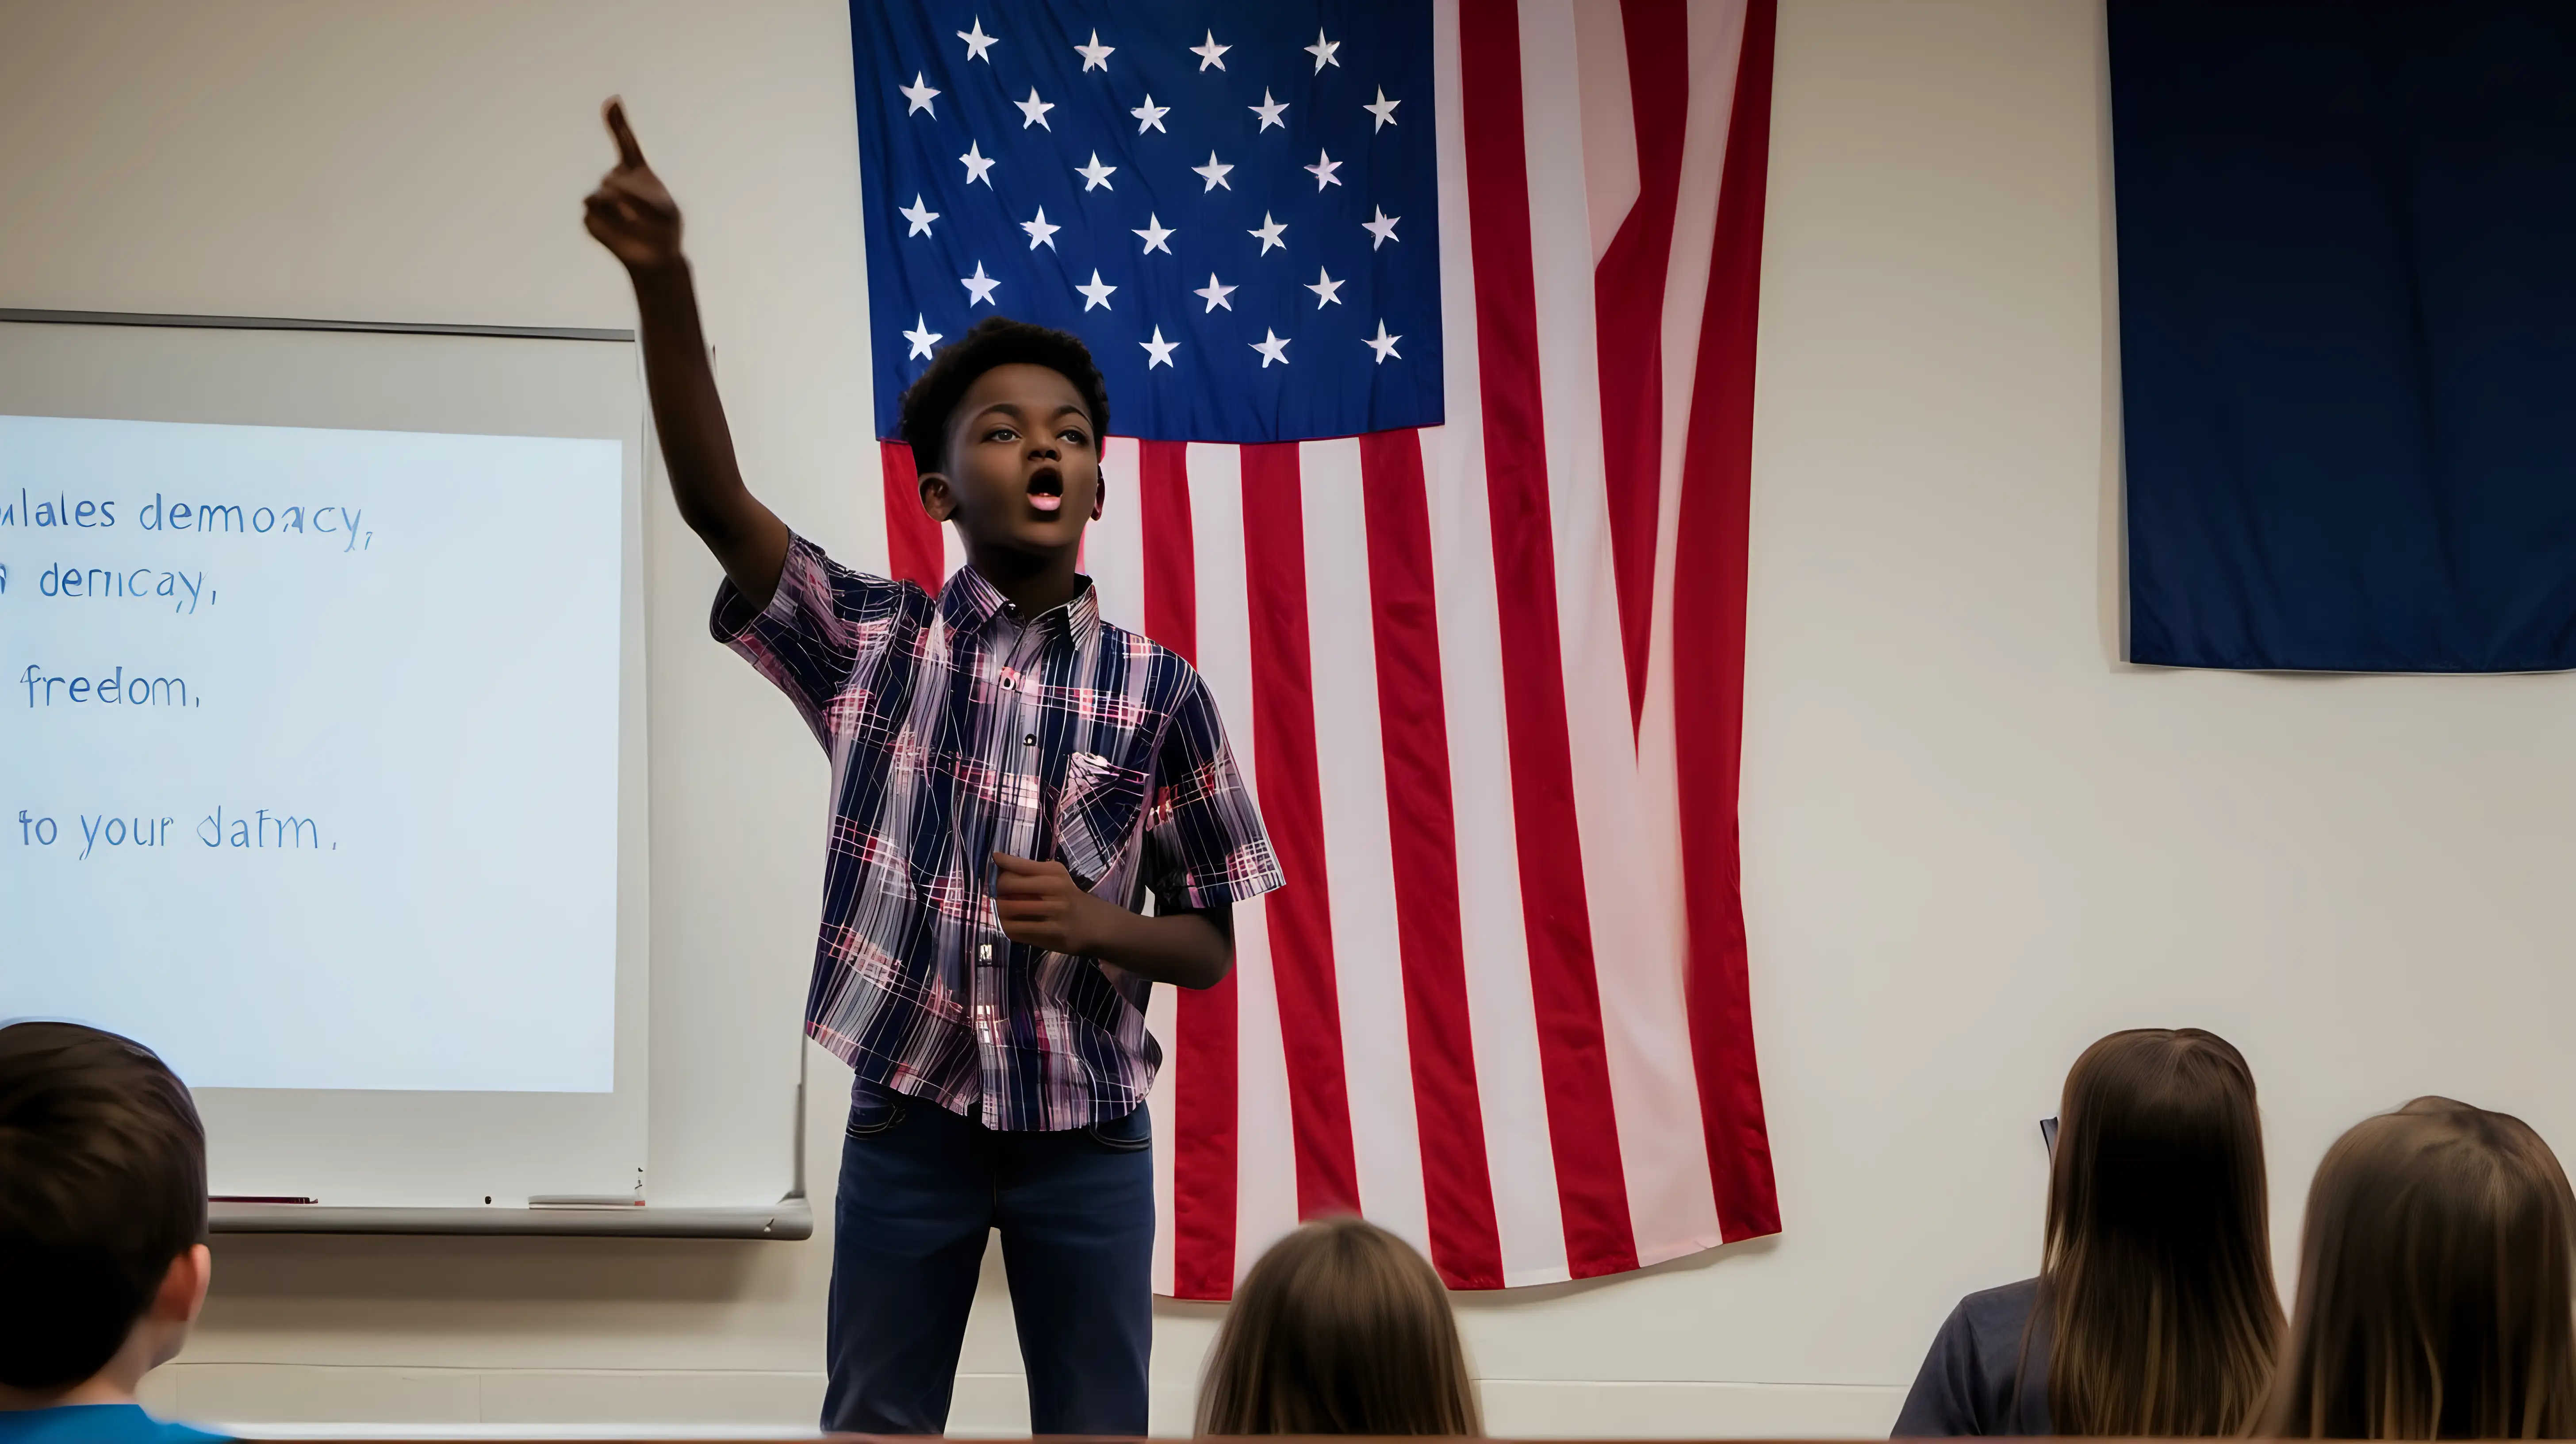 Student Patriotism Speech with American Flag